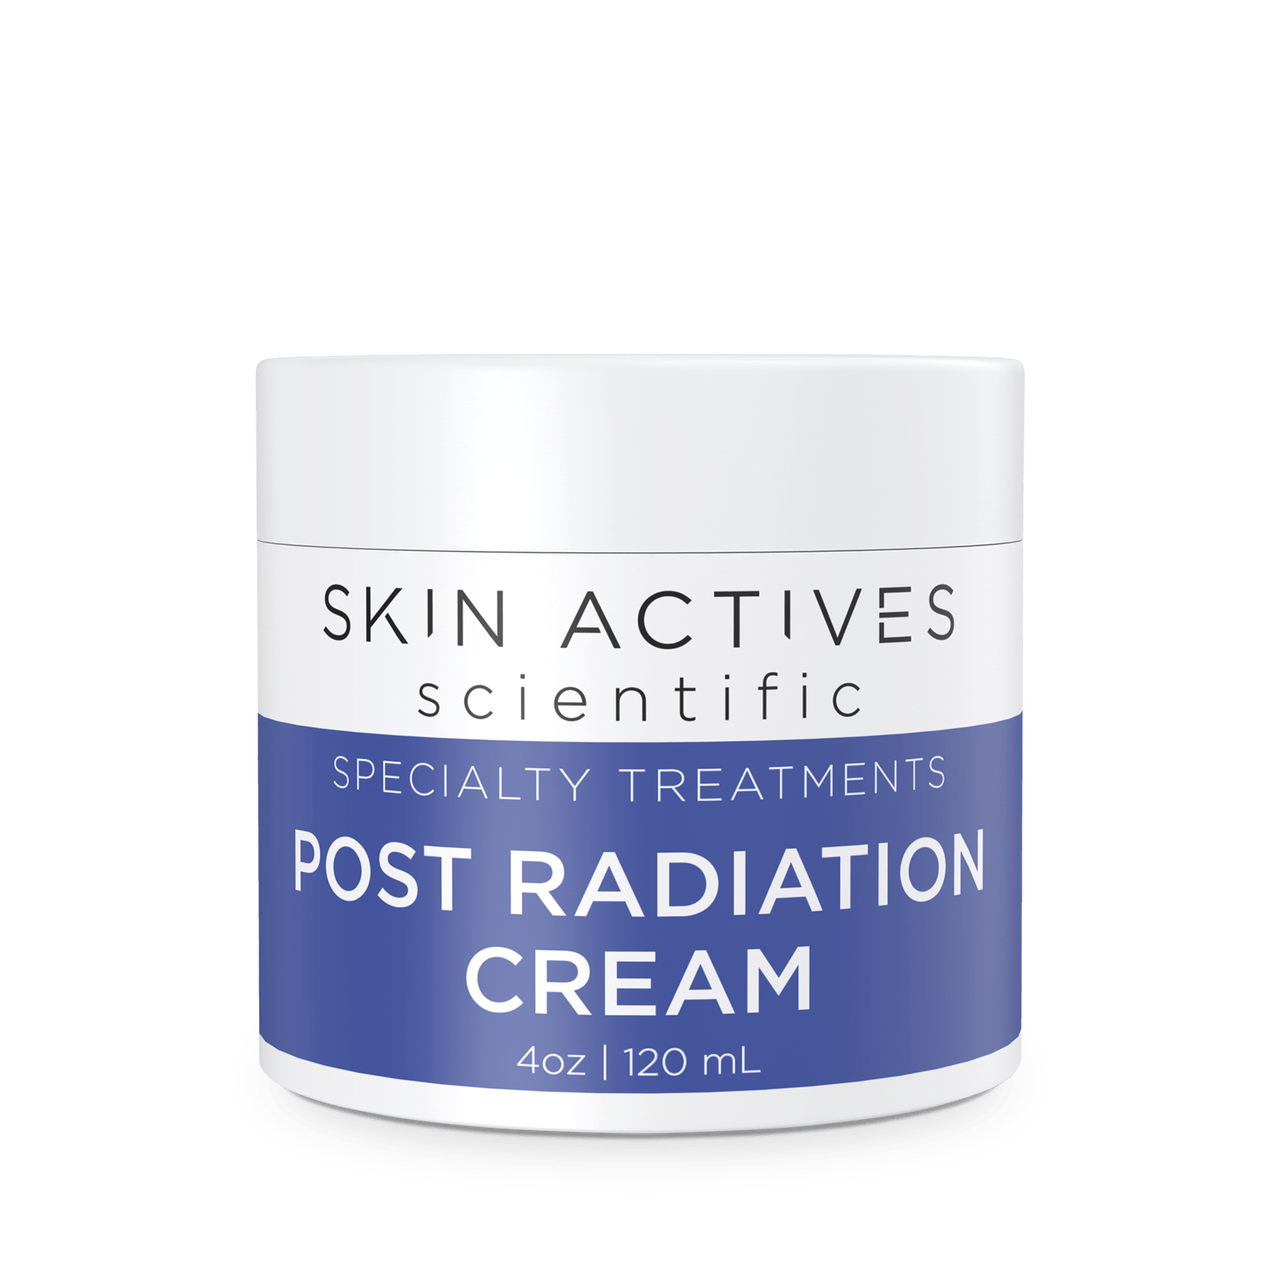 Skin Cream - Post Radiation - Skin Actives - 4.0 oz.